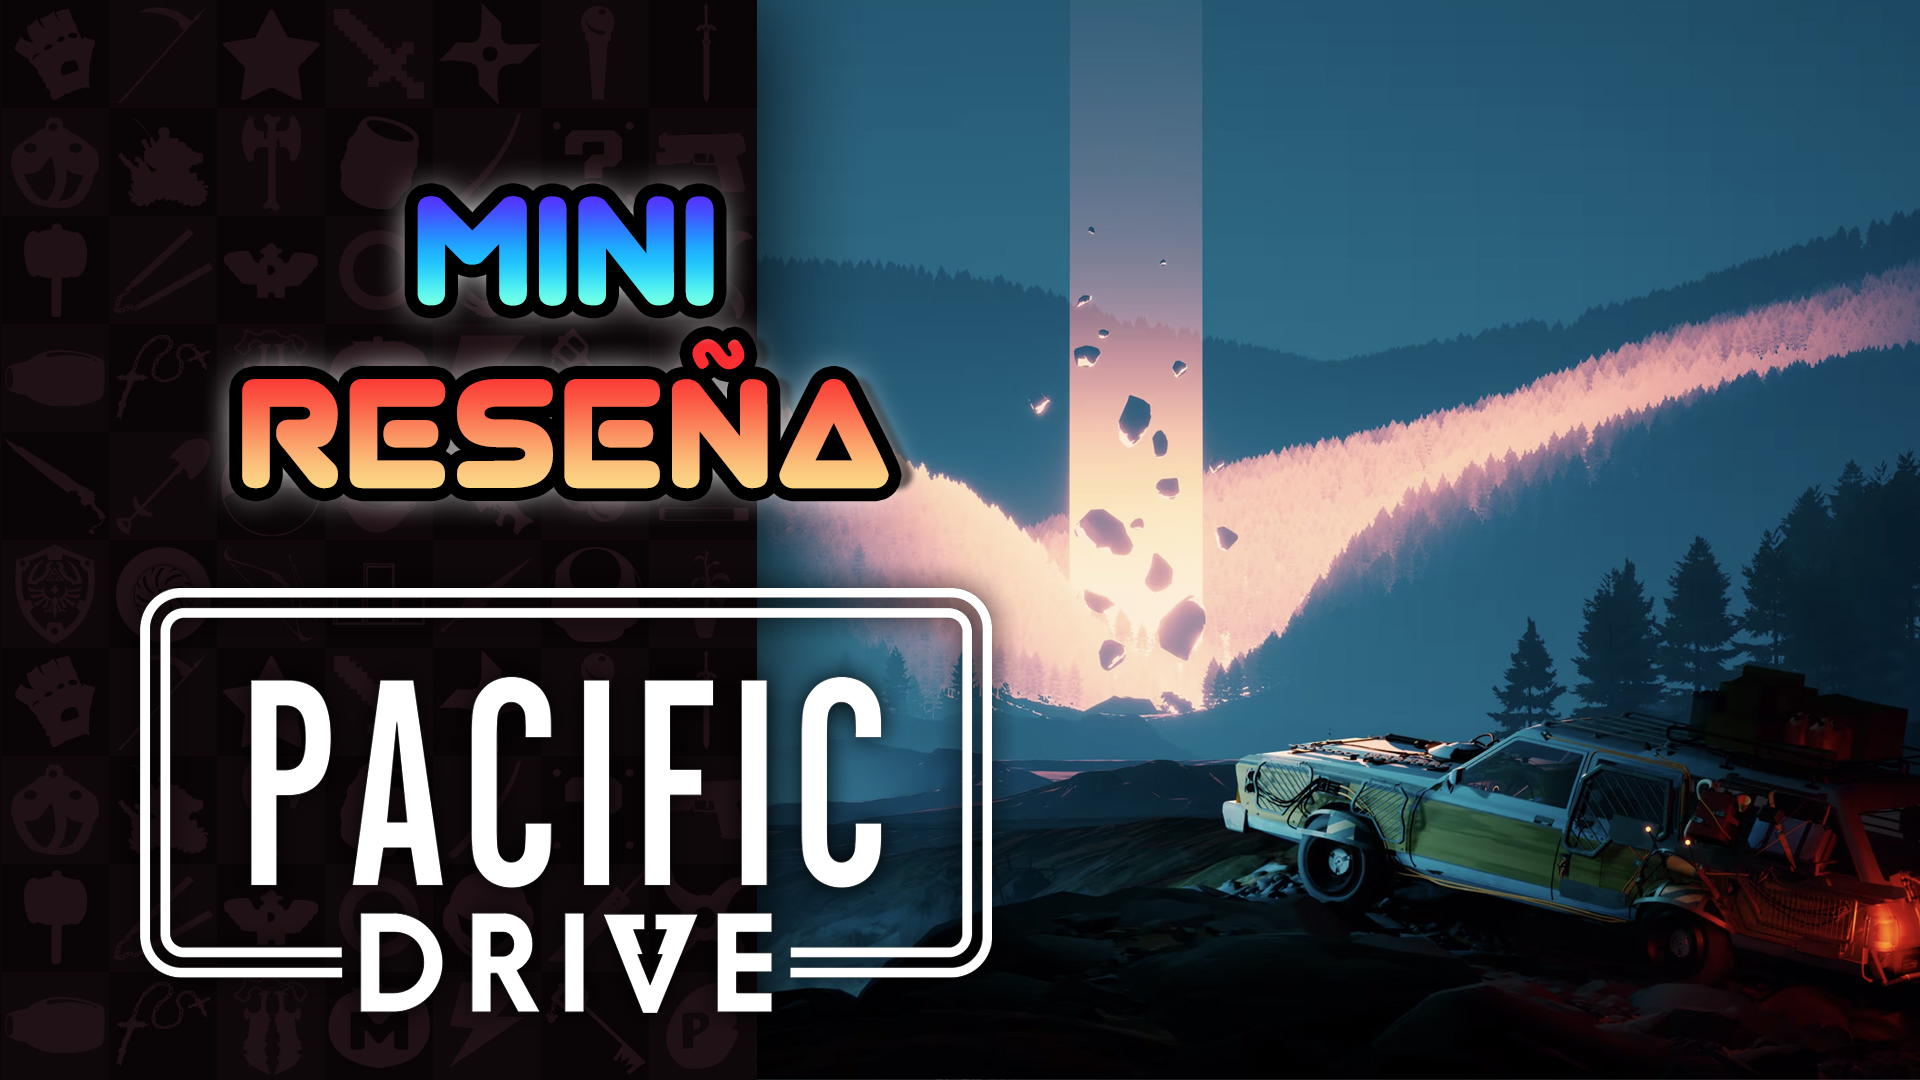 Mini Reseña Pacific Drive – Una misteriosa aventura quemando llanta